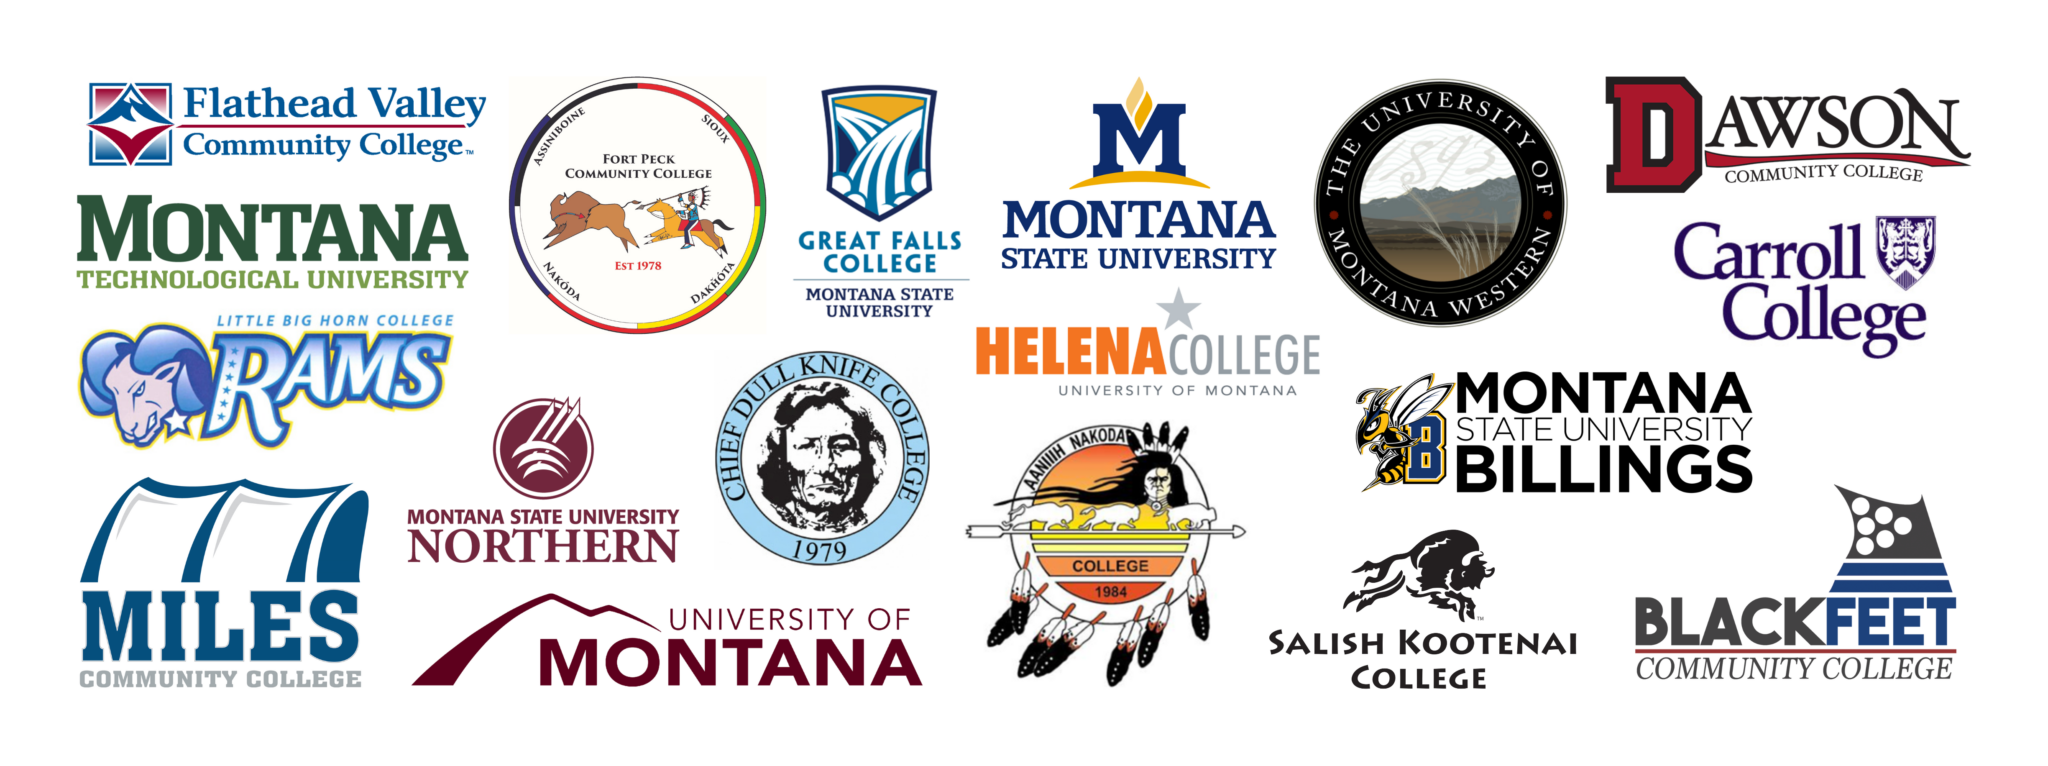 Montana Campus Connect Affiliates Logos